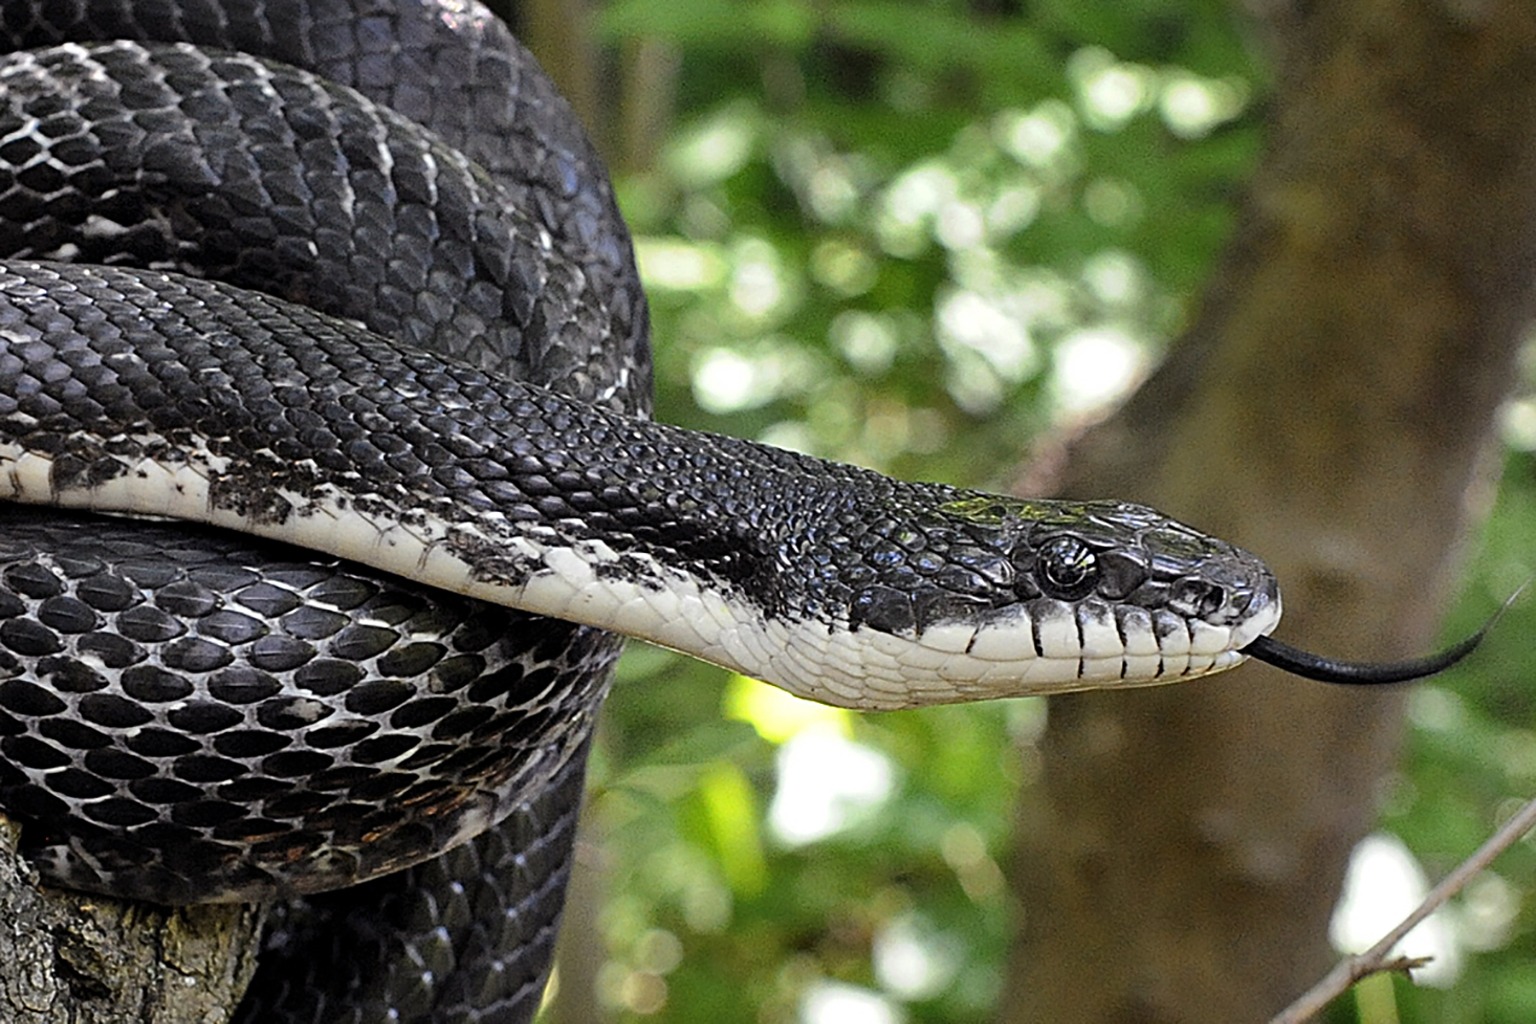 Black Rat Snake | The Maryland Zoo